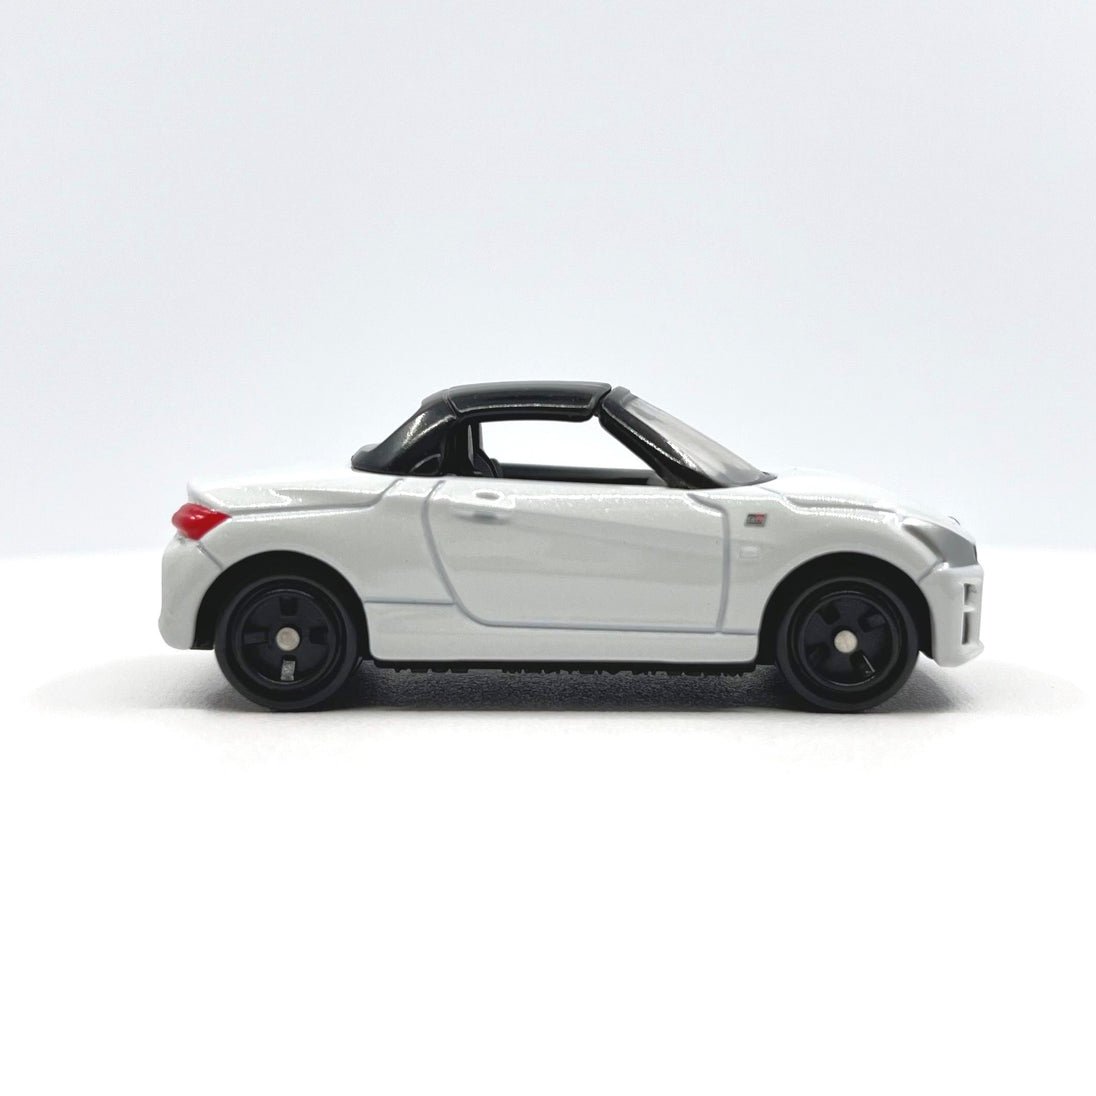 1:63 Copen GR Sport Alloy Tomica Diecast Car Model by Takara Tomy